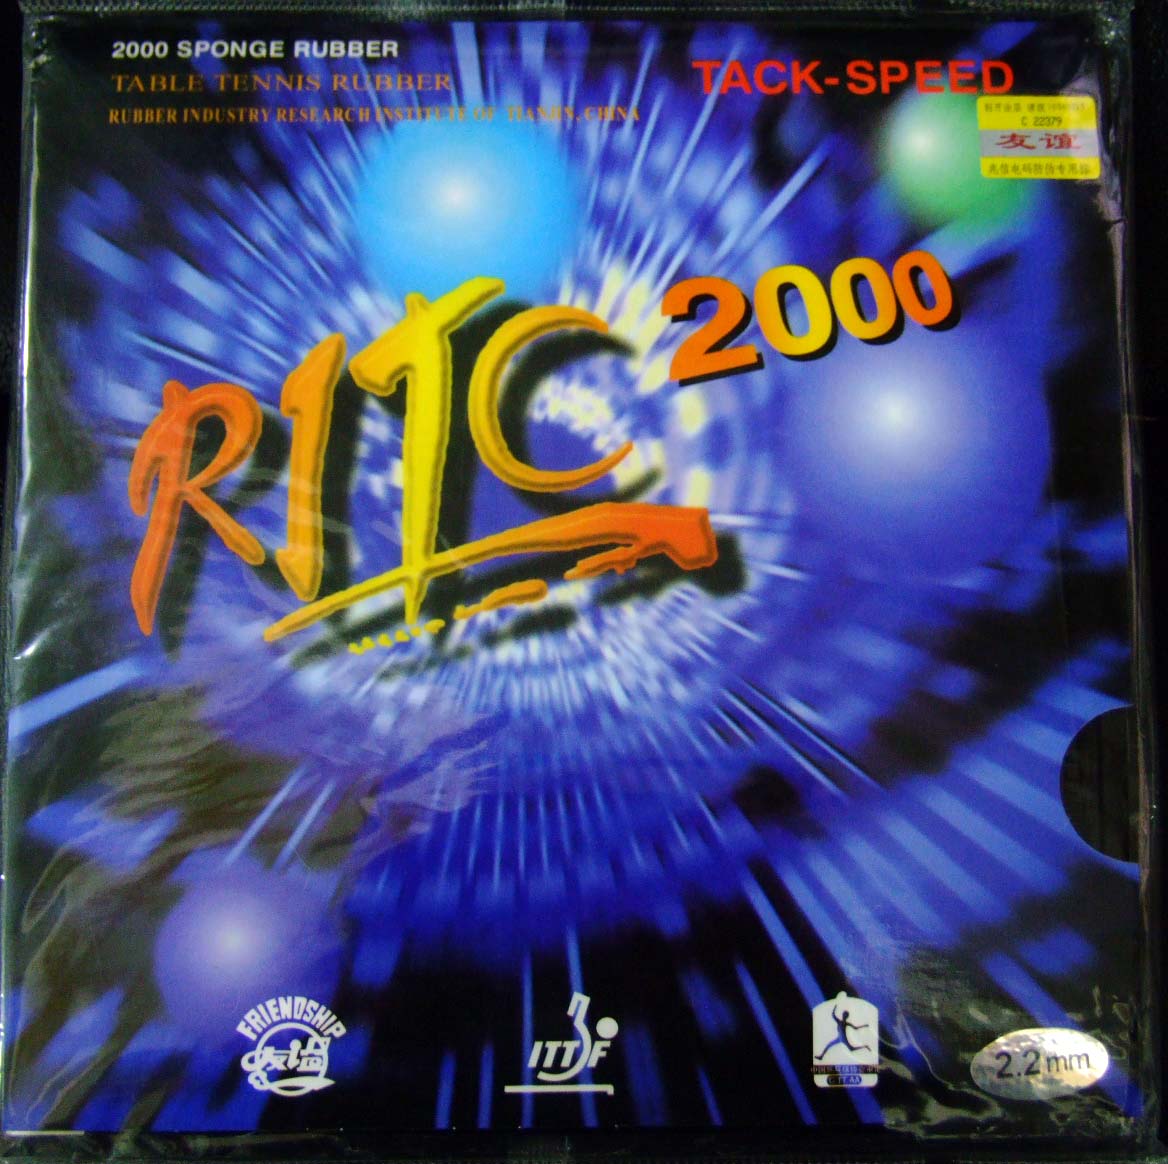 RITC 2000 Tack-Speed Rubber